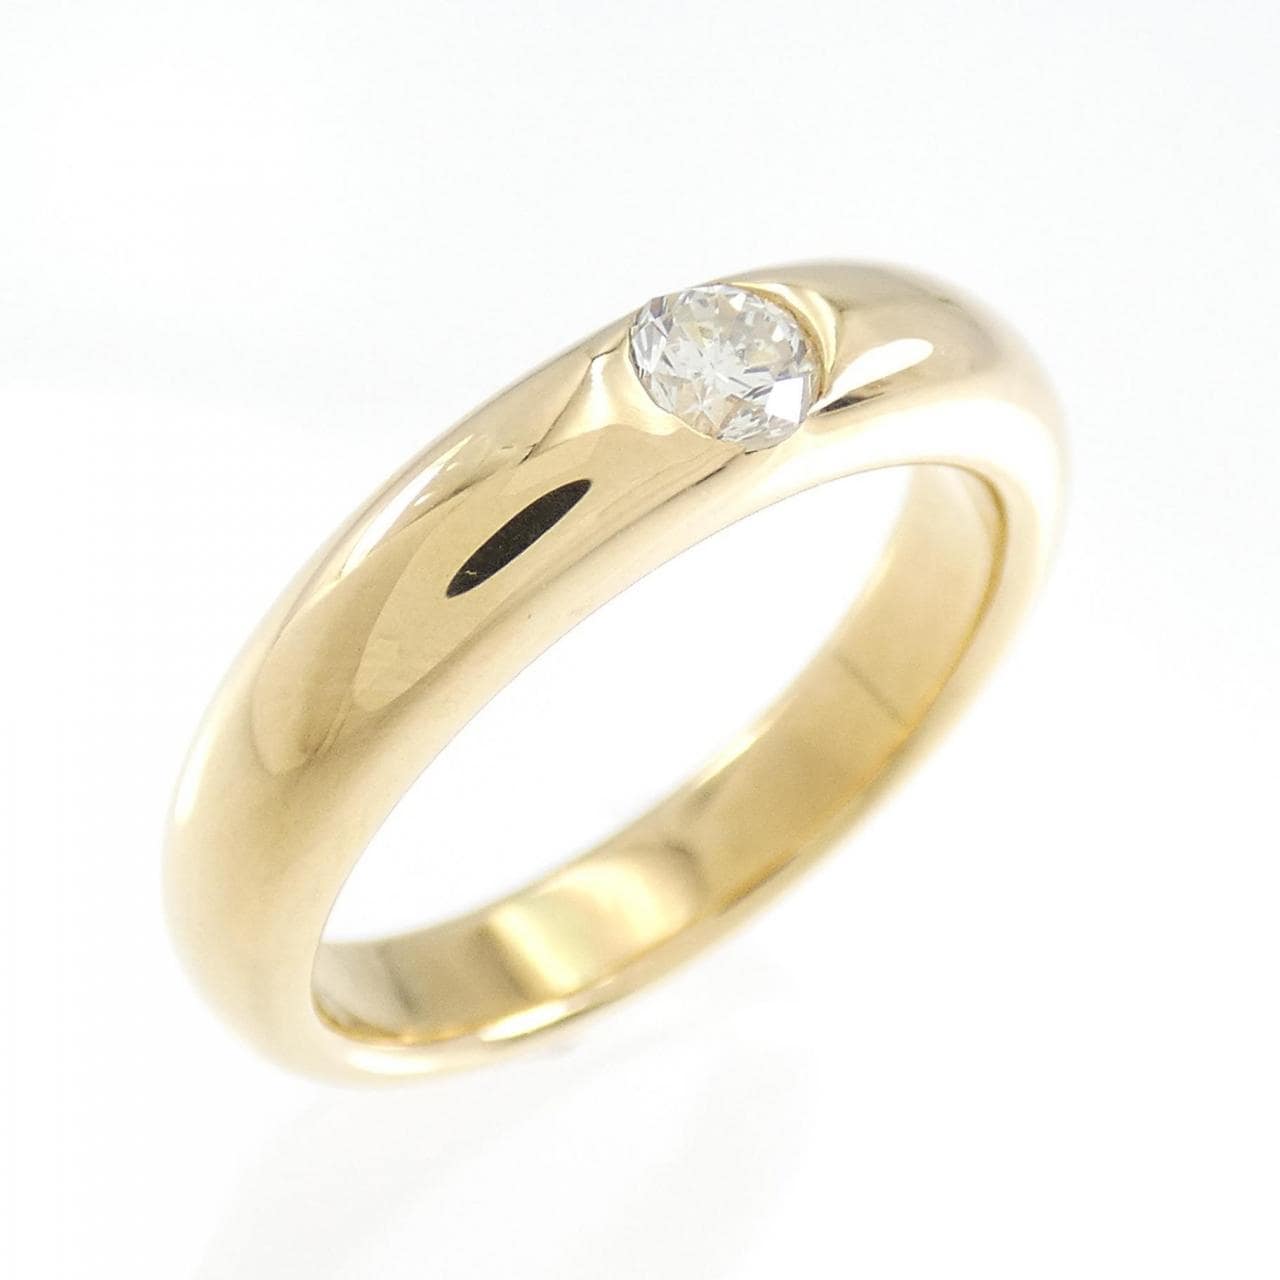 K18YG Solitaire Diamond Ring 0.21CT